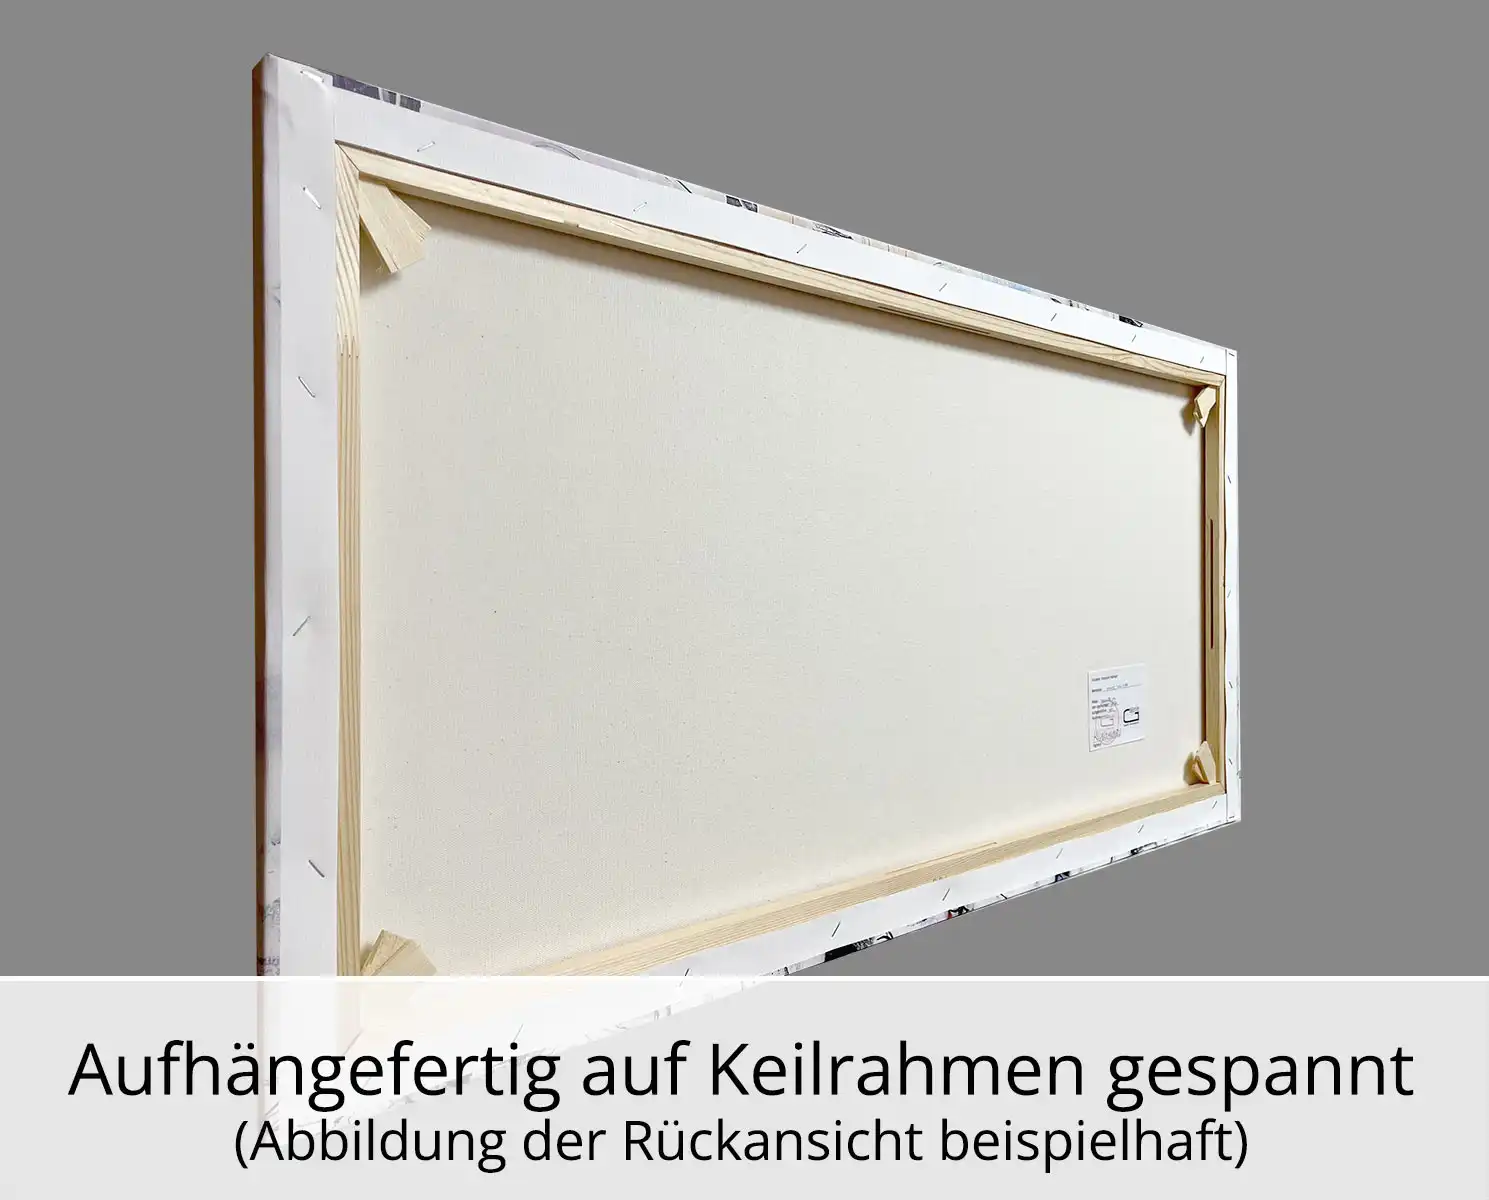 Kunstdruck, signiert: "Artofant", Holger Mühlbauer-Gardemin, Edition, Nr. 1/100